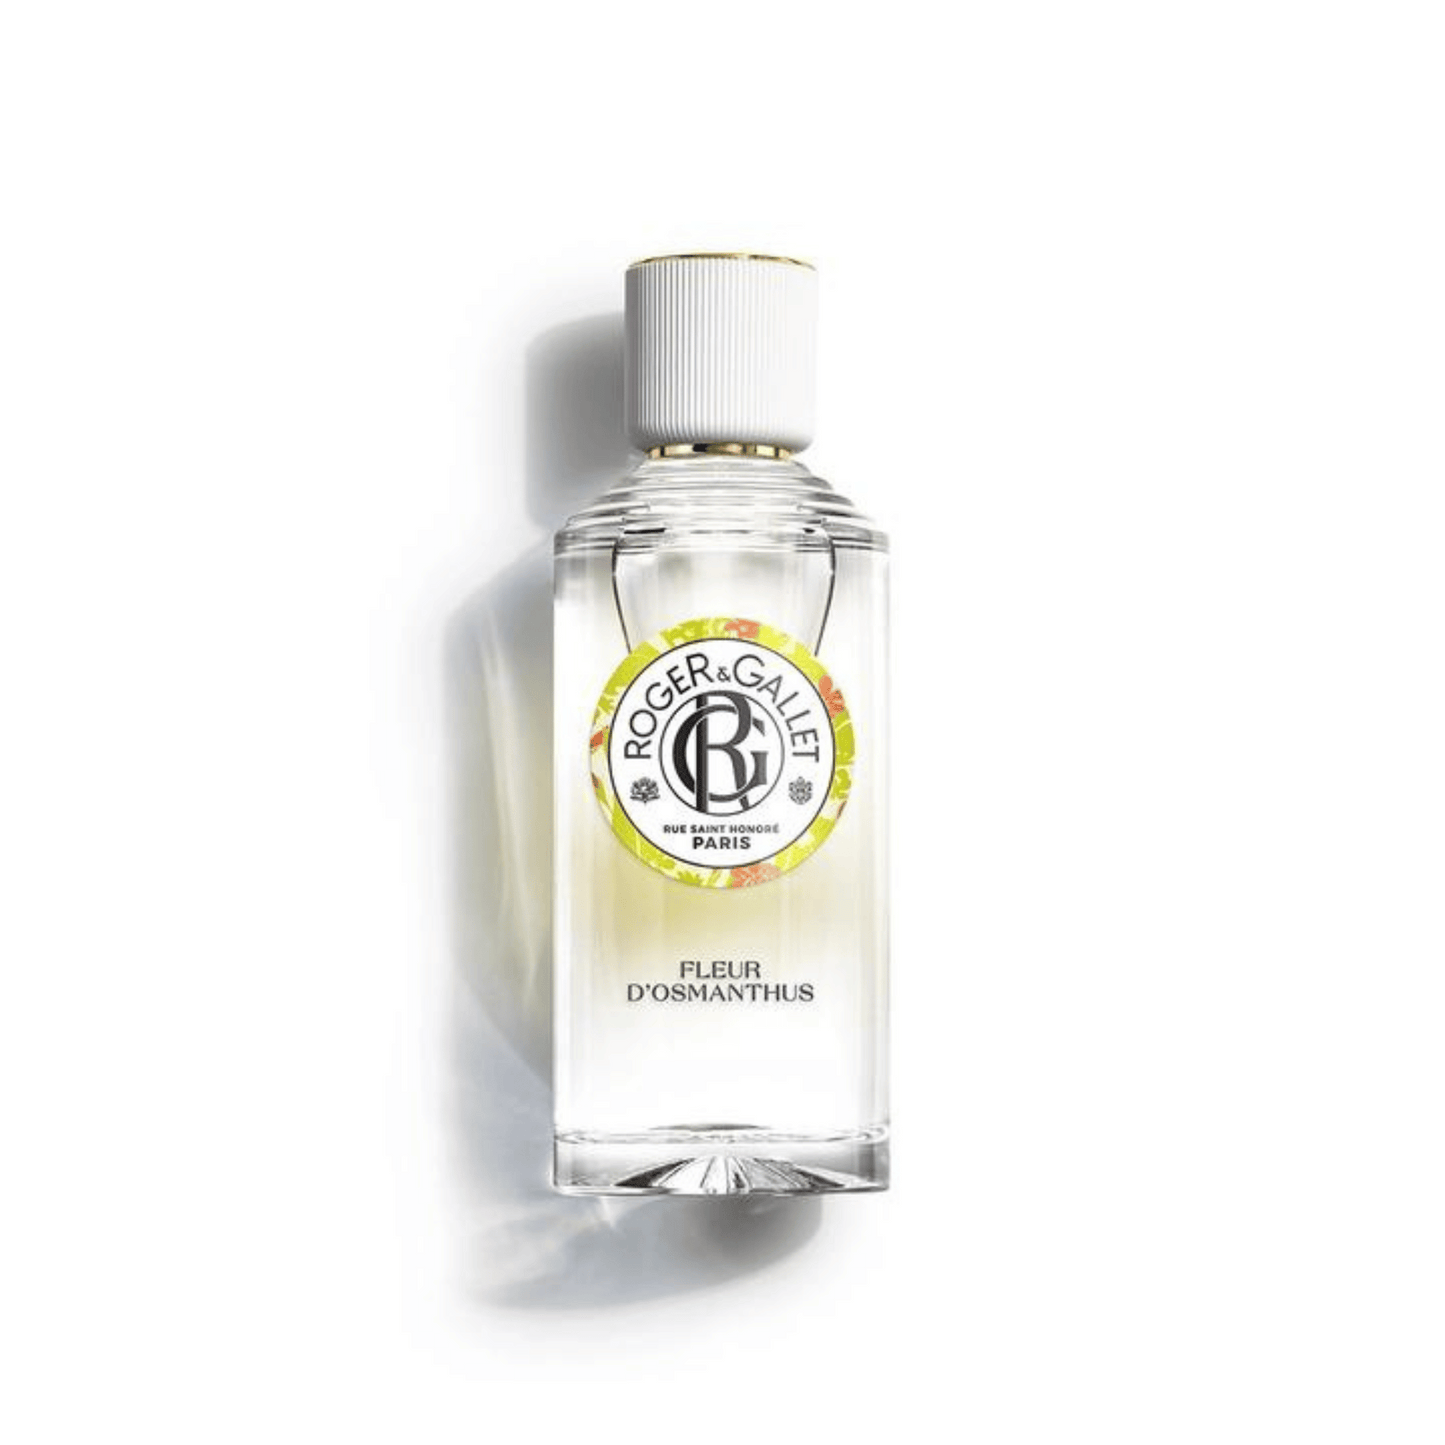 Primary Image of Fleur D'Osmanthus Fresh Fragrance Spray